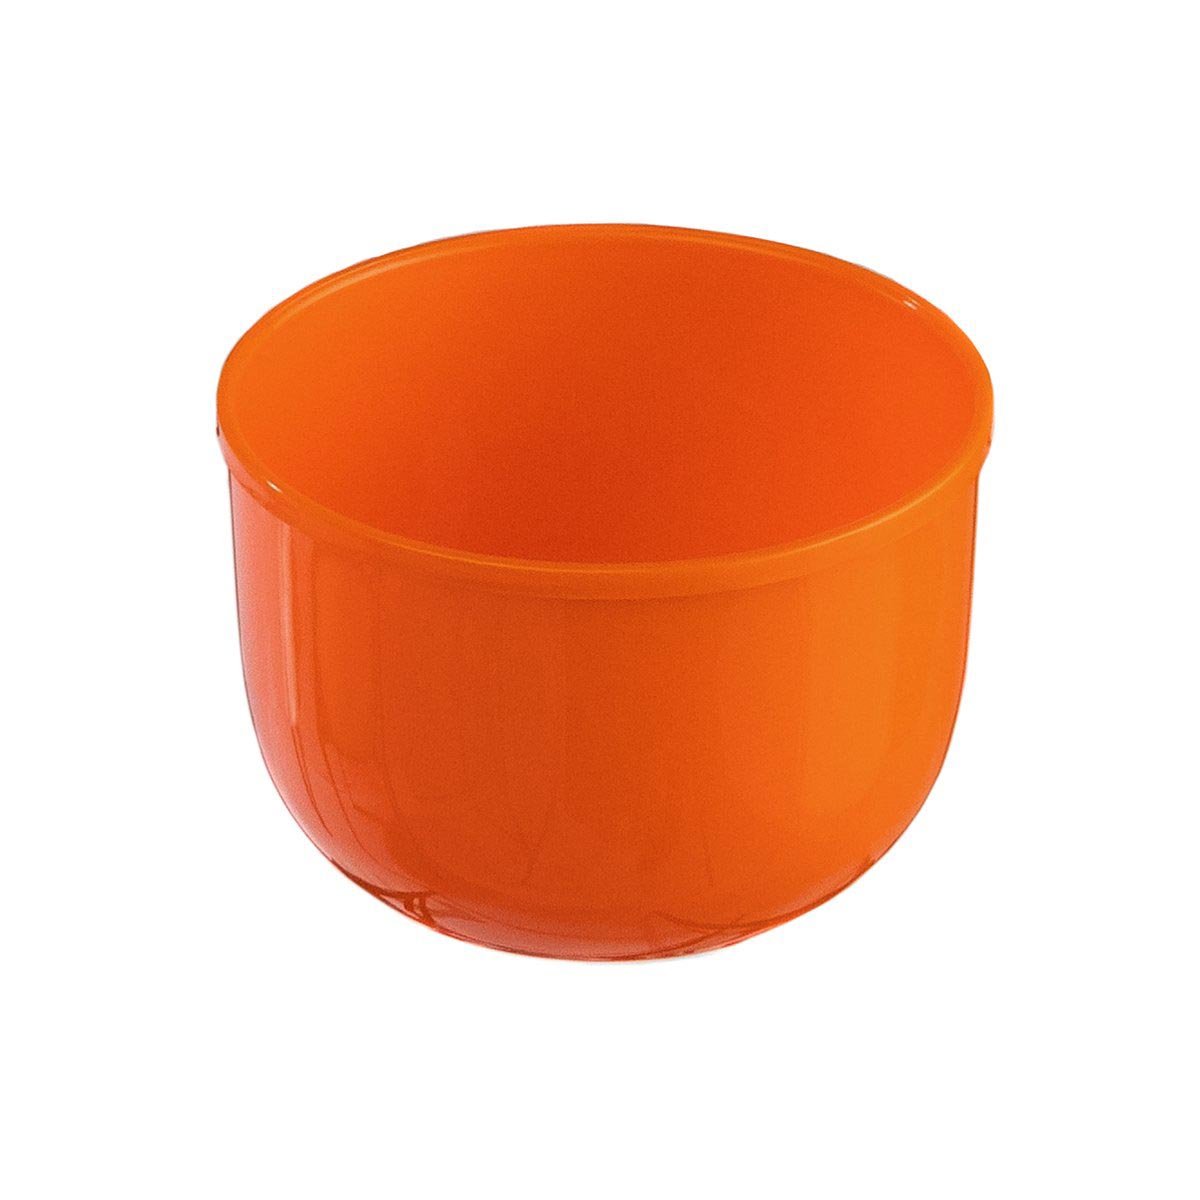 An orange lid cup